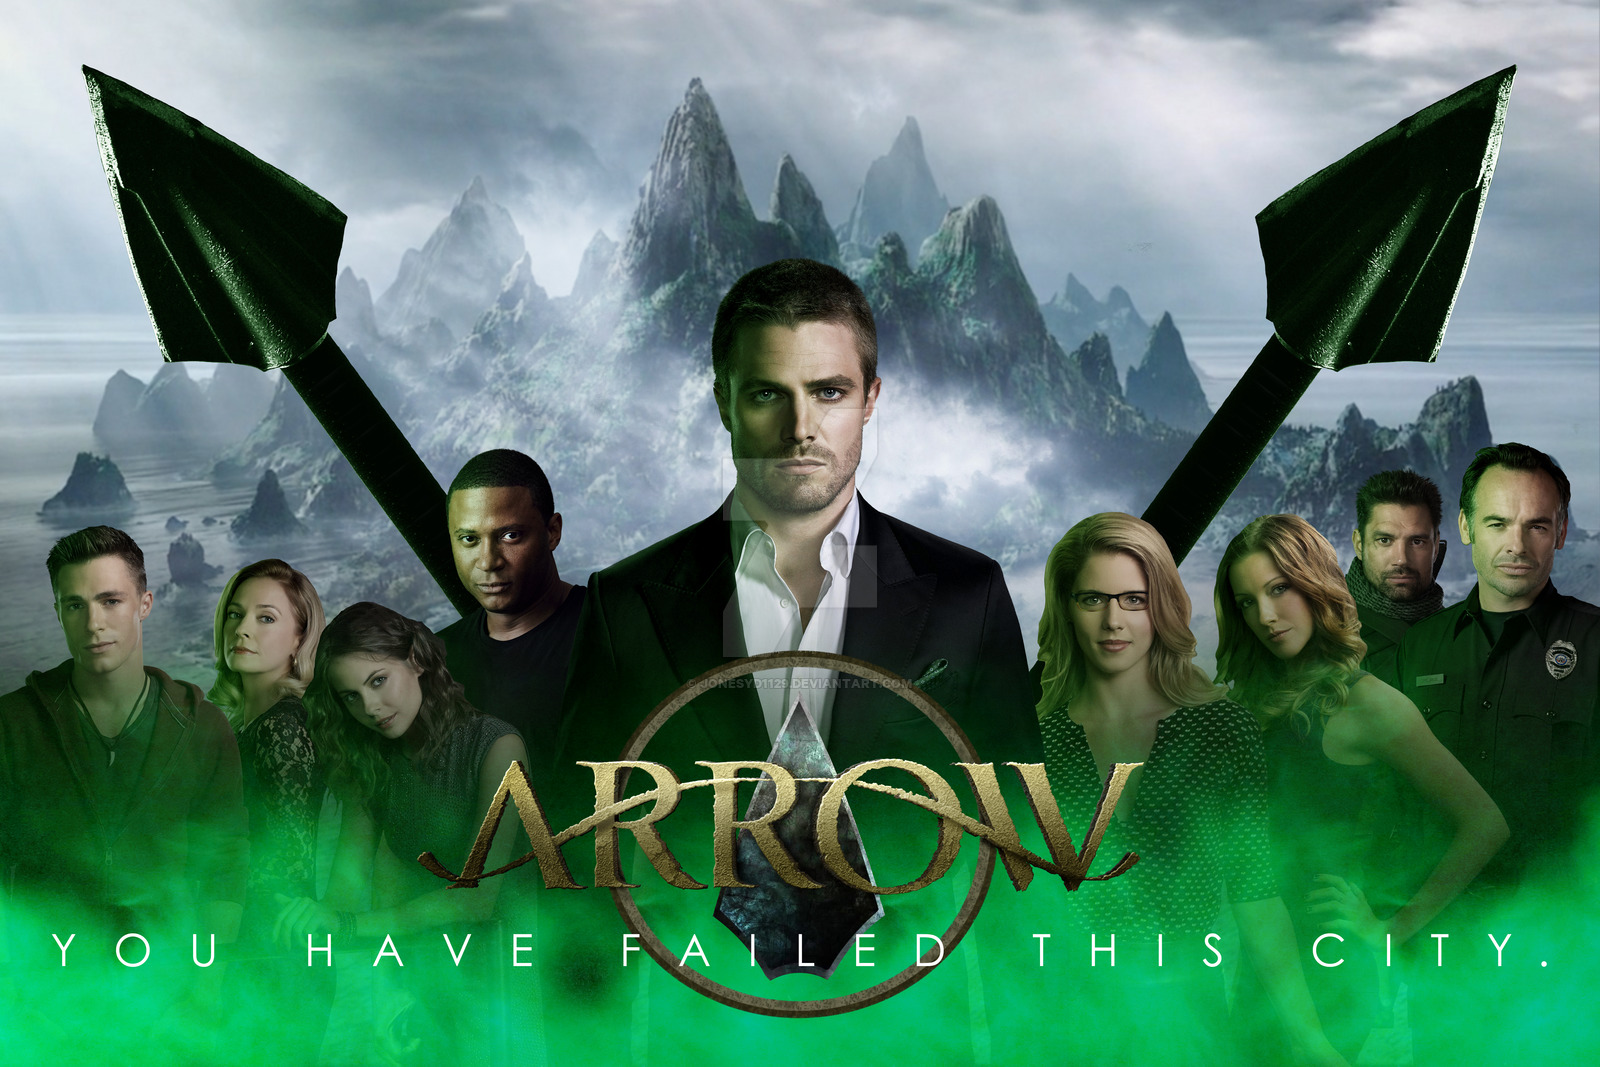 the arrow season 1 all episodes download